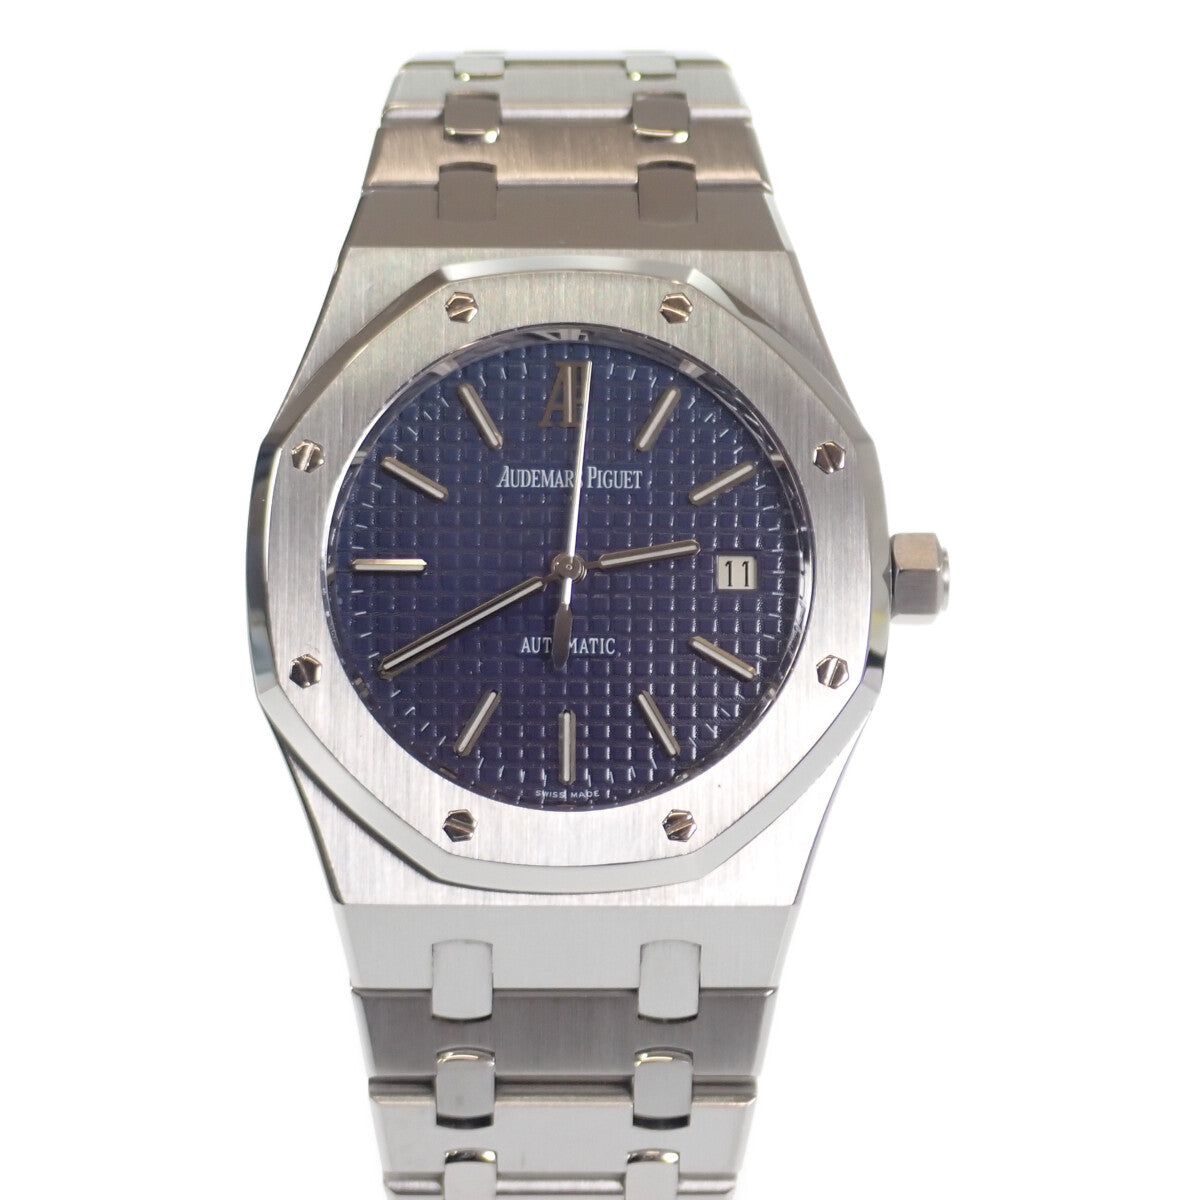 Audemars Piguet Royal Oak Men's Wristwatch, Stainless Steel, AUDEMARS PIGUET Pre-owned 	15300ST.OO.1220ST.02 in Excellent condition